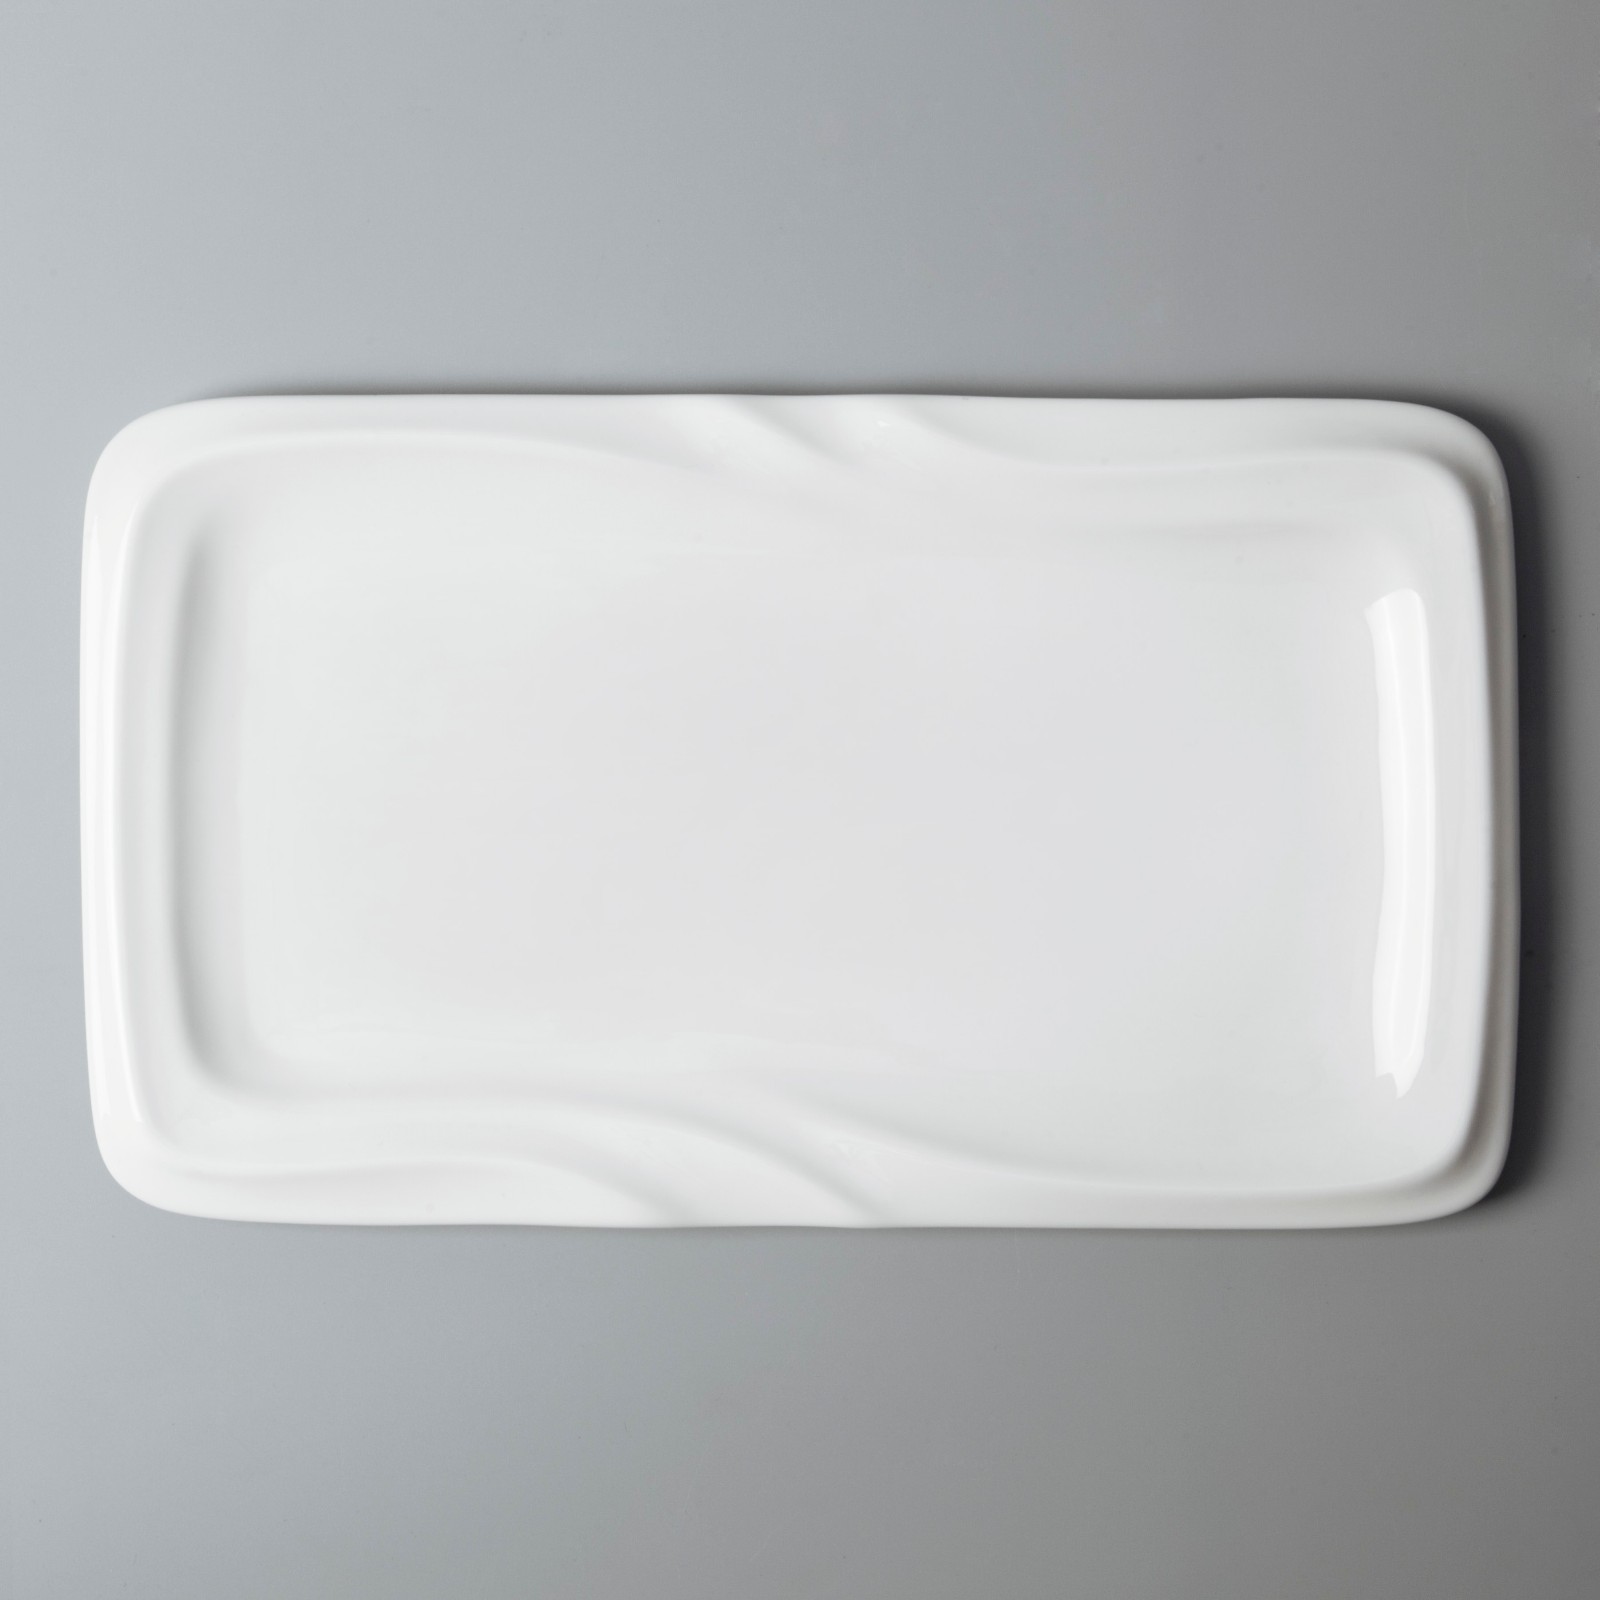 rim white plate set series for hotel-13